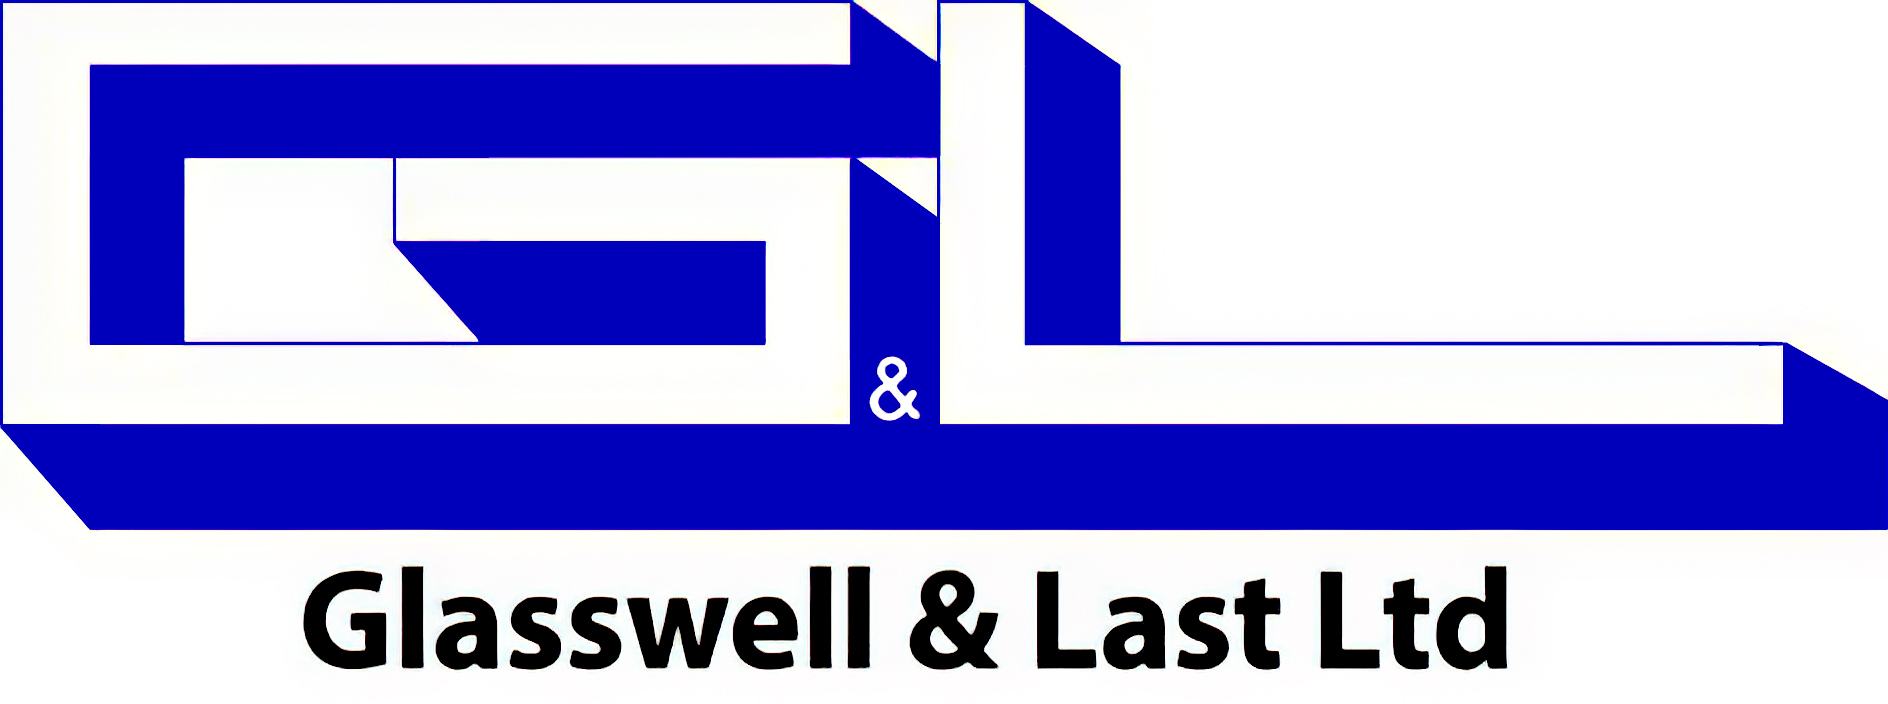 Glasswell logo